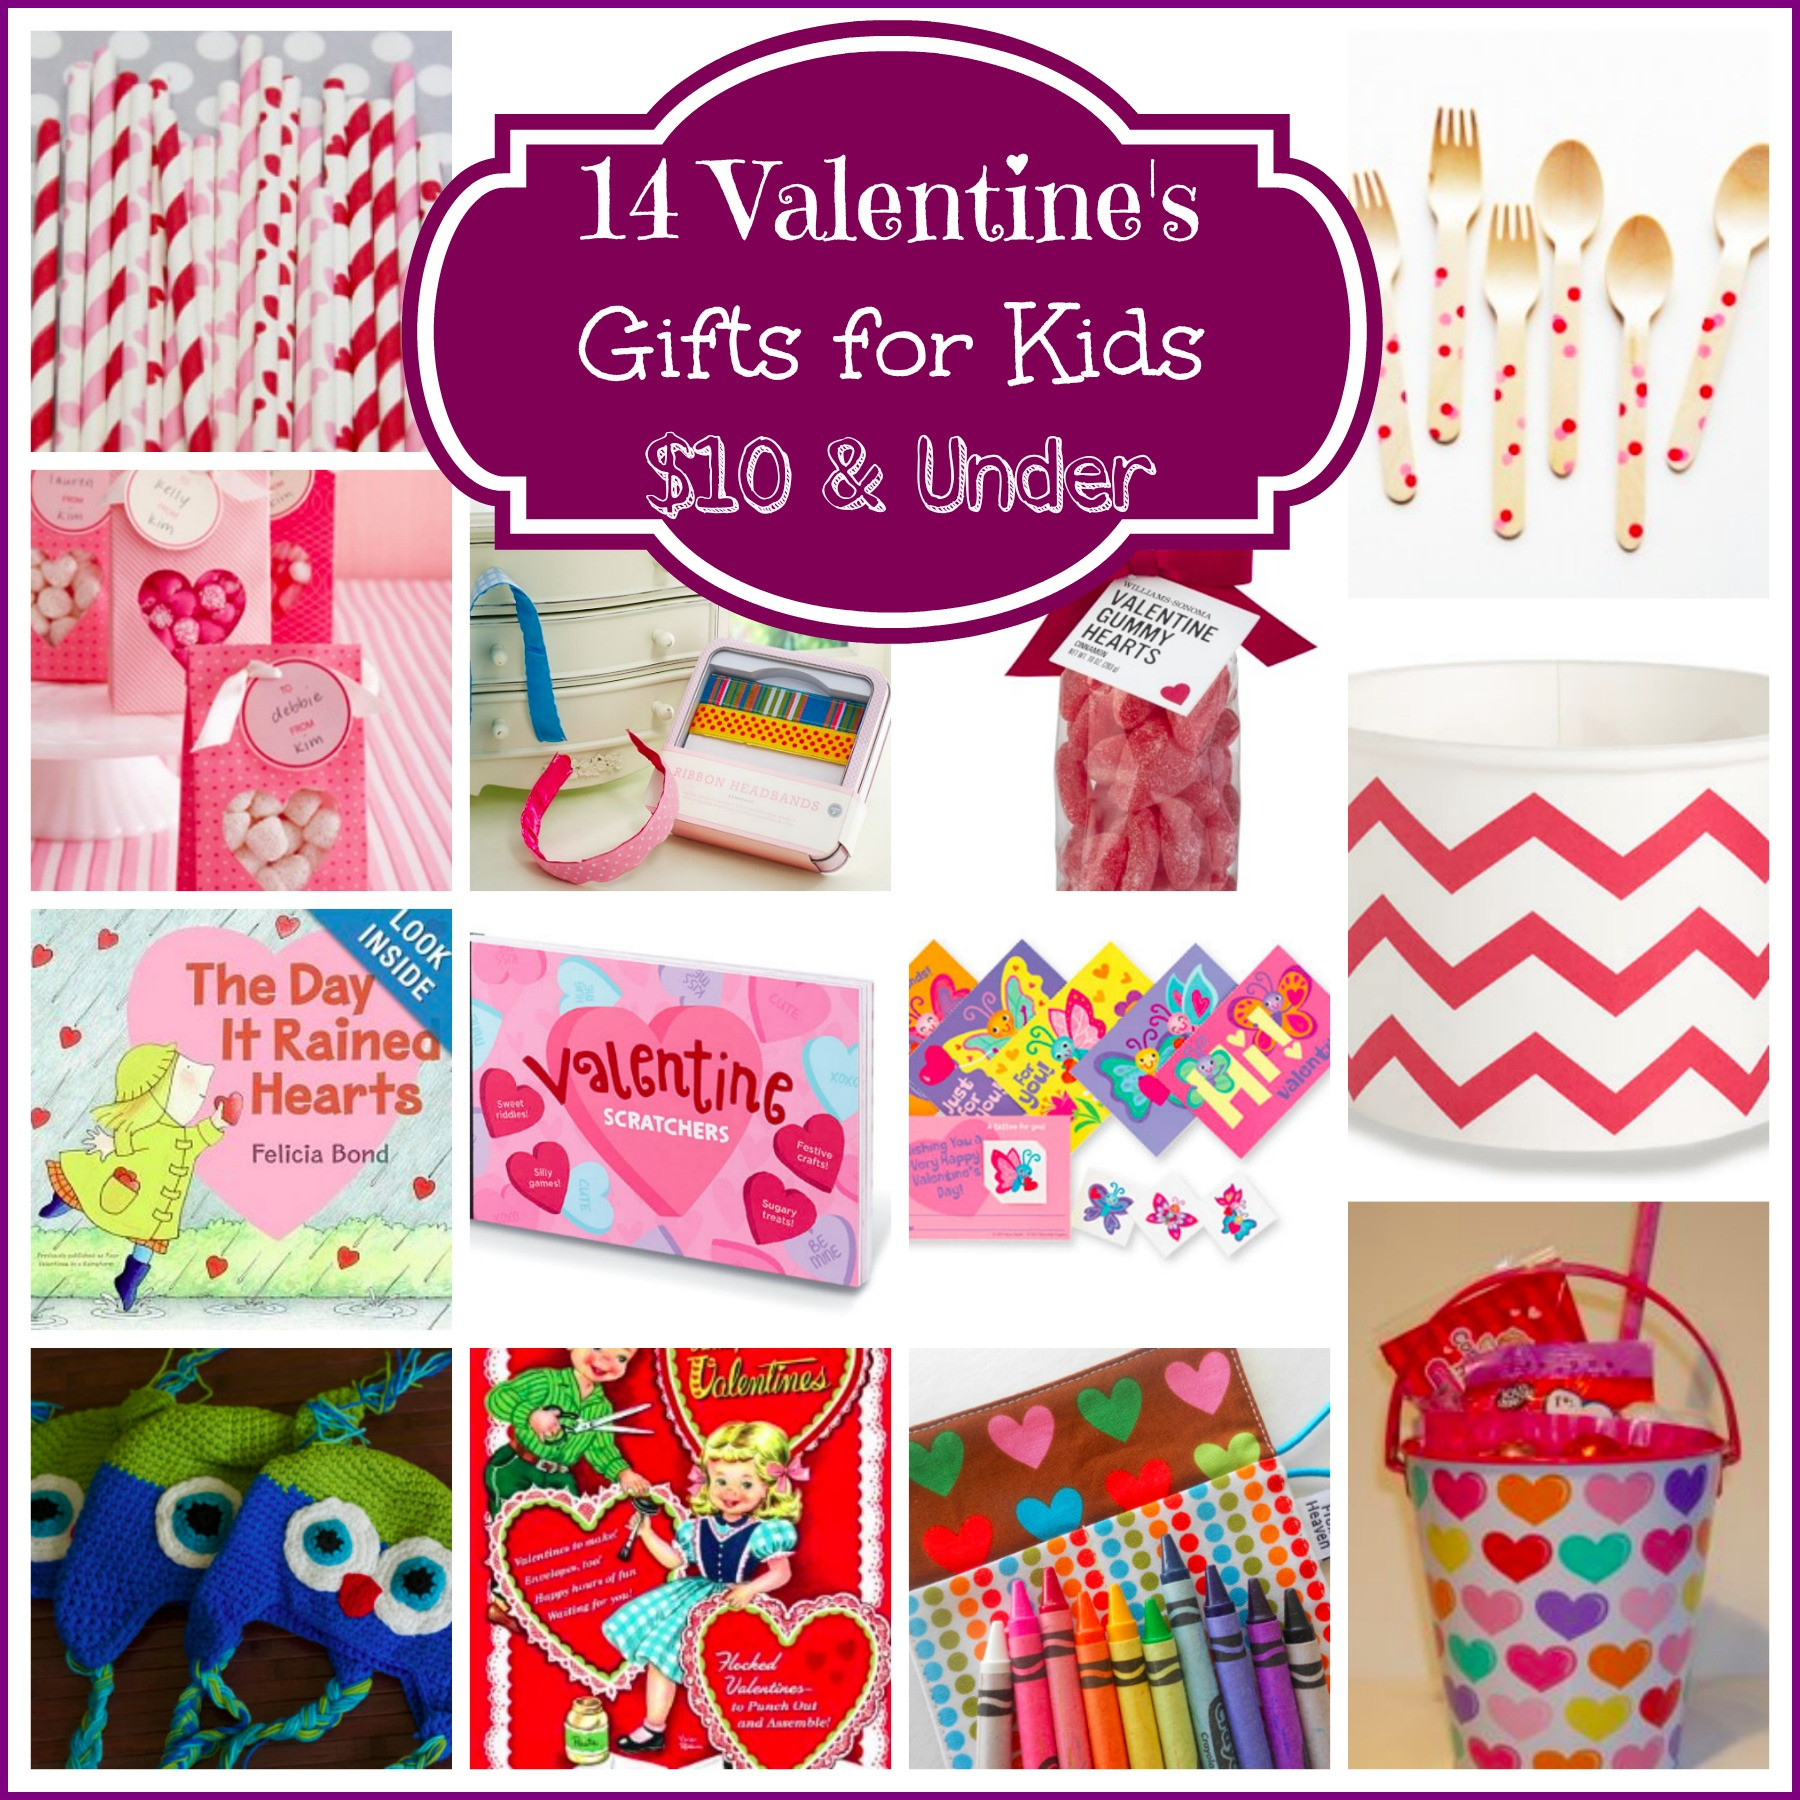 Valentines Gifts For Children
 14 Valentine’s Day Gifts for Kids $10 & Under